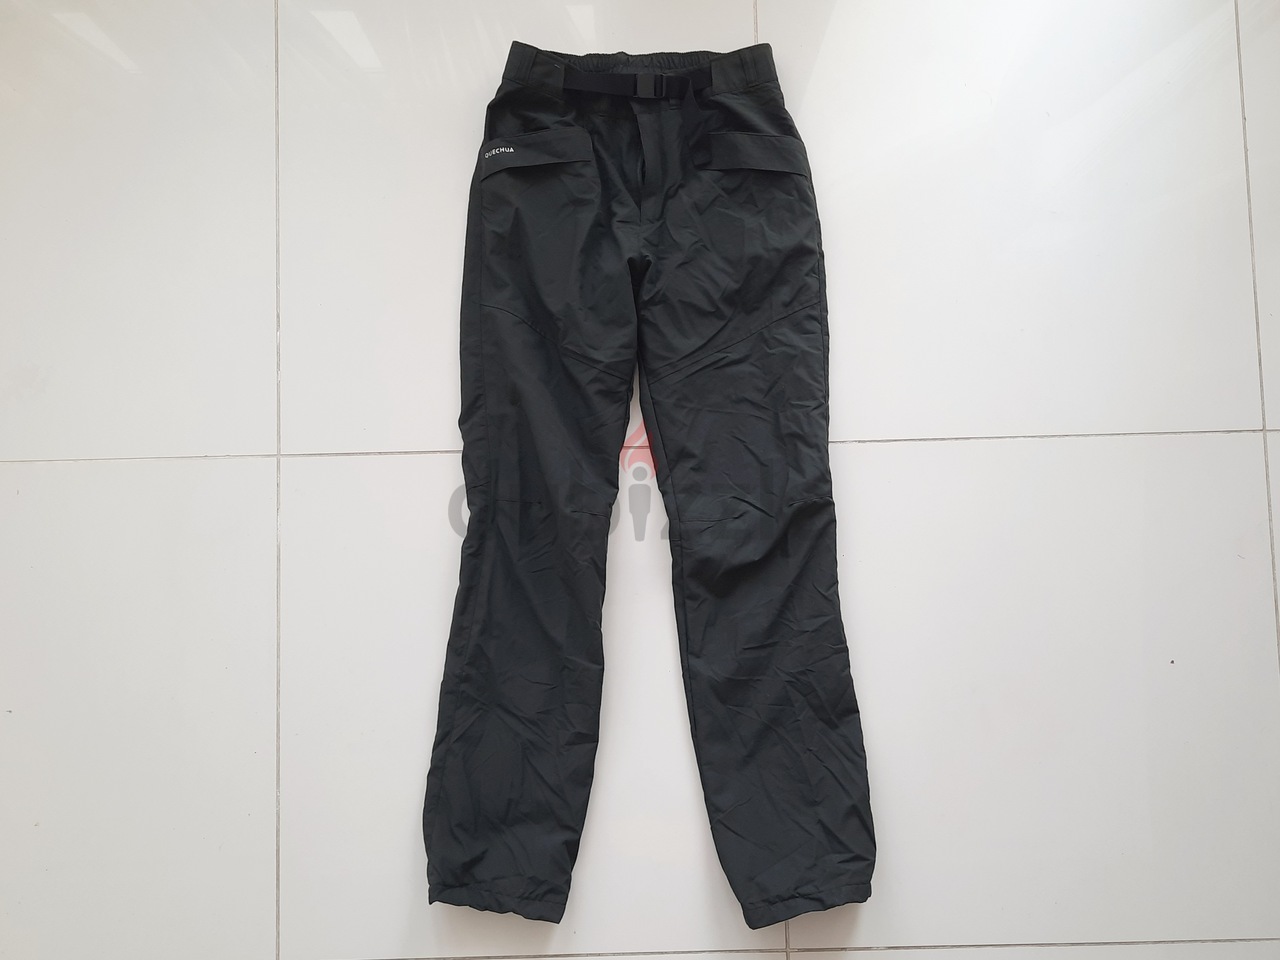 DECATHLON QUECHUA Boy's Hiking Pants 2 in 1 Convertible - MH 550 - dark  cinnamon | Catch.com.au